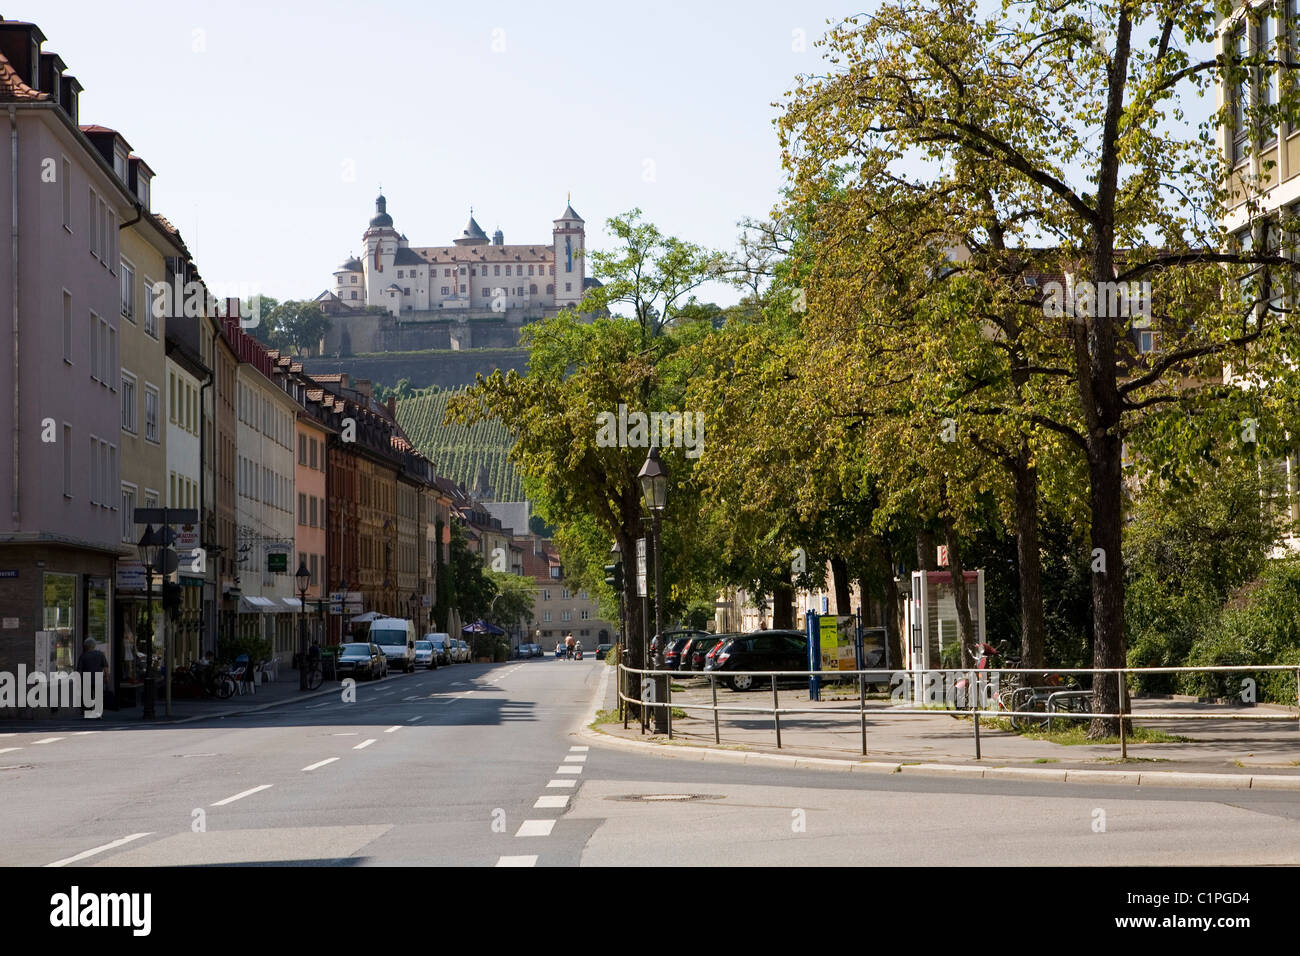 Germany, Bavaria, Wurzburg, Festung Marienberg from town high street Stock Photo